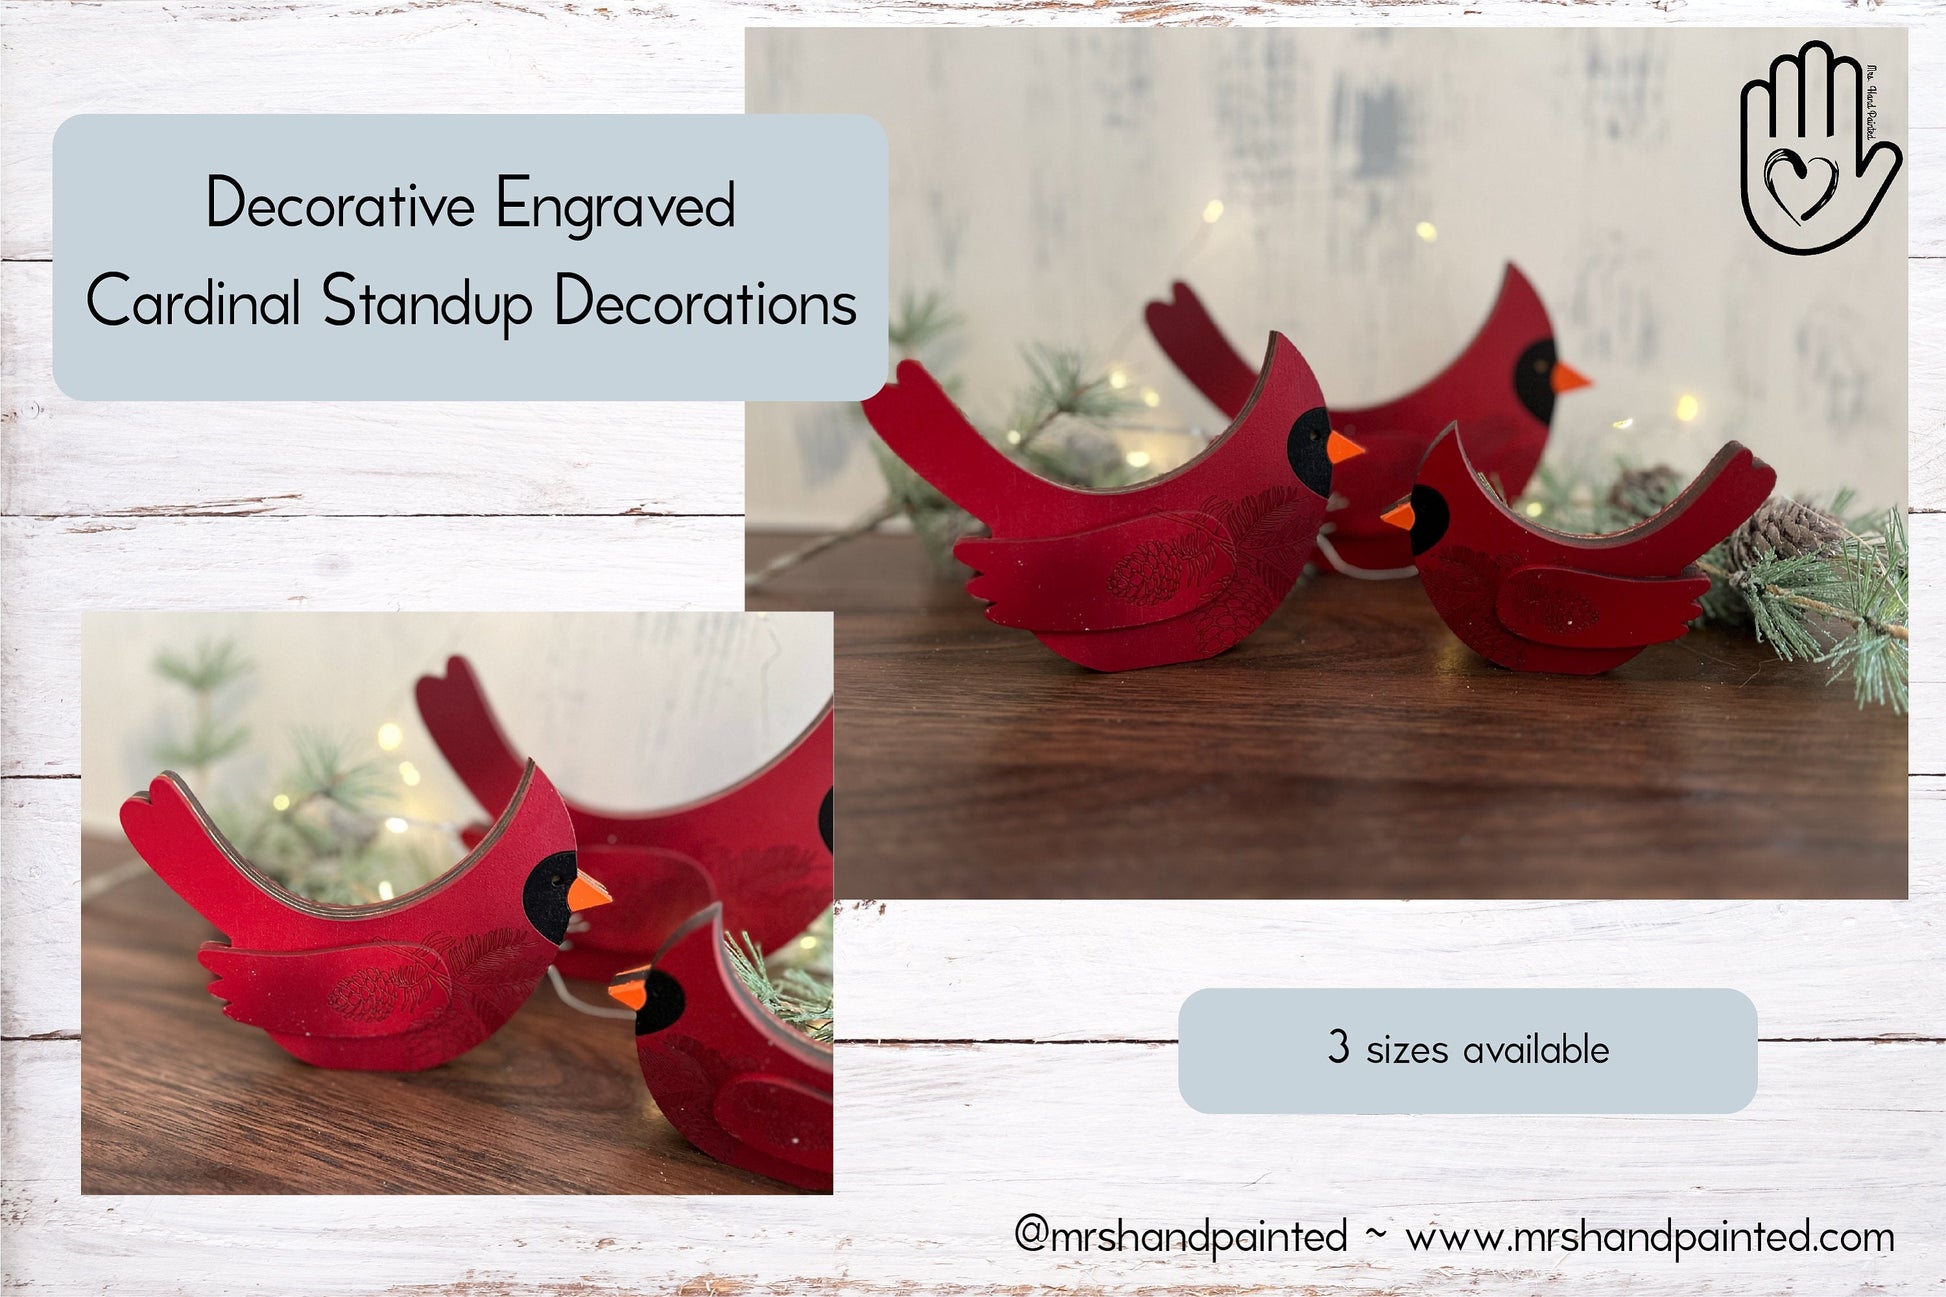 Decorative Engraved Laser Cut Standup Cardinals